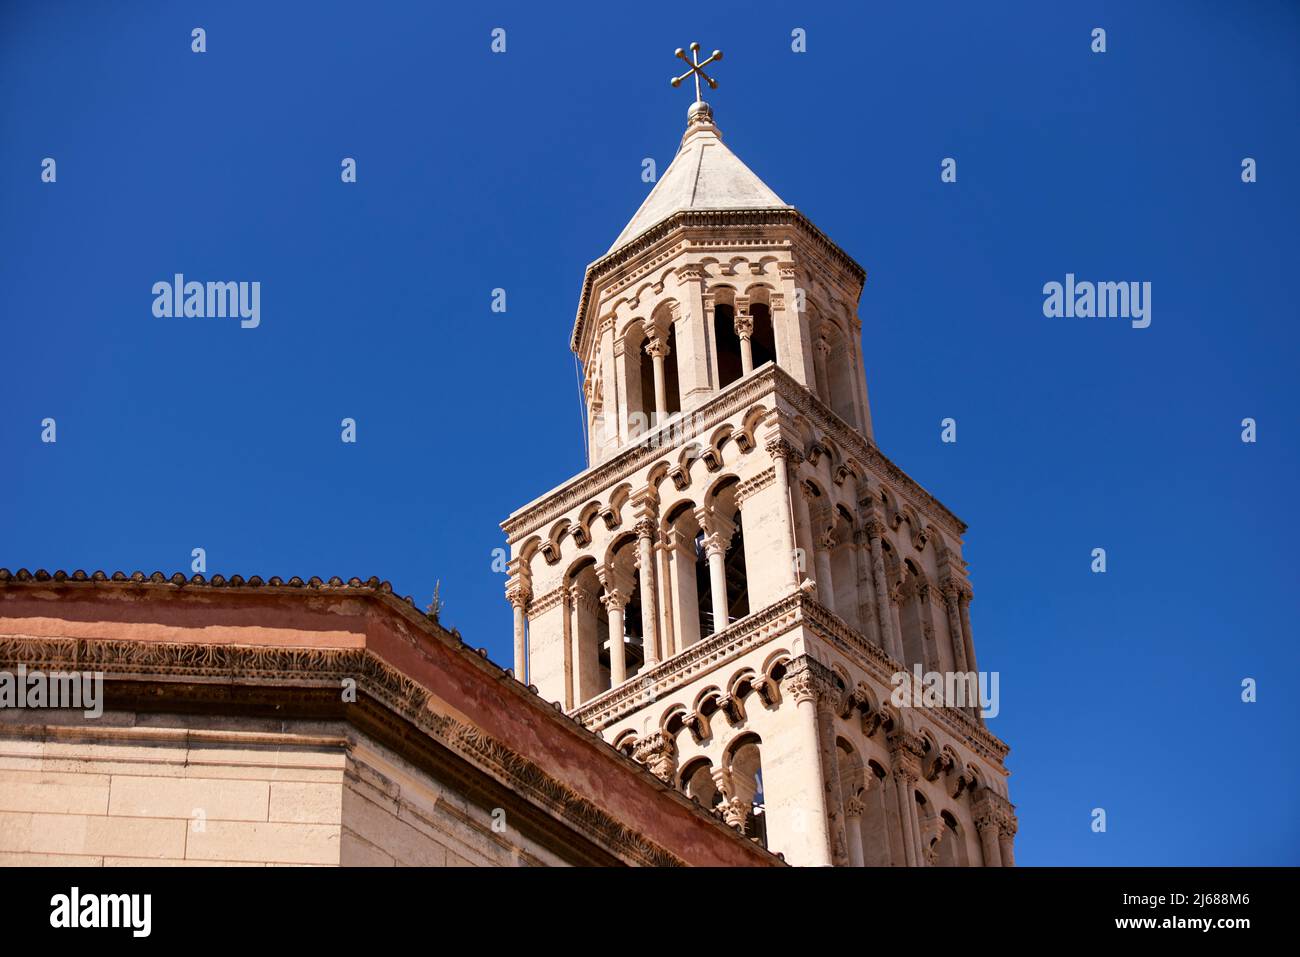 The city of Split in Croatia in the region of Dalmatia, landmark Saint Domnius Cathedral tower Stock Photo